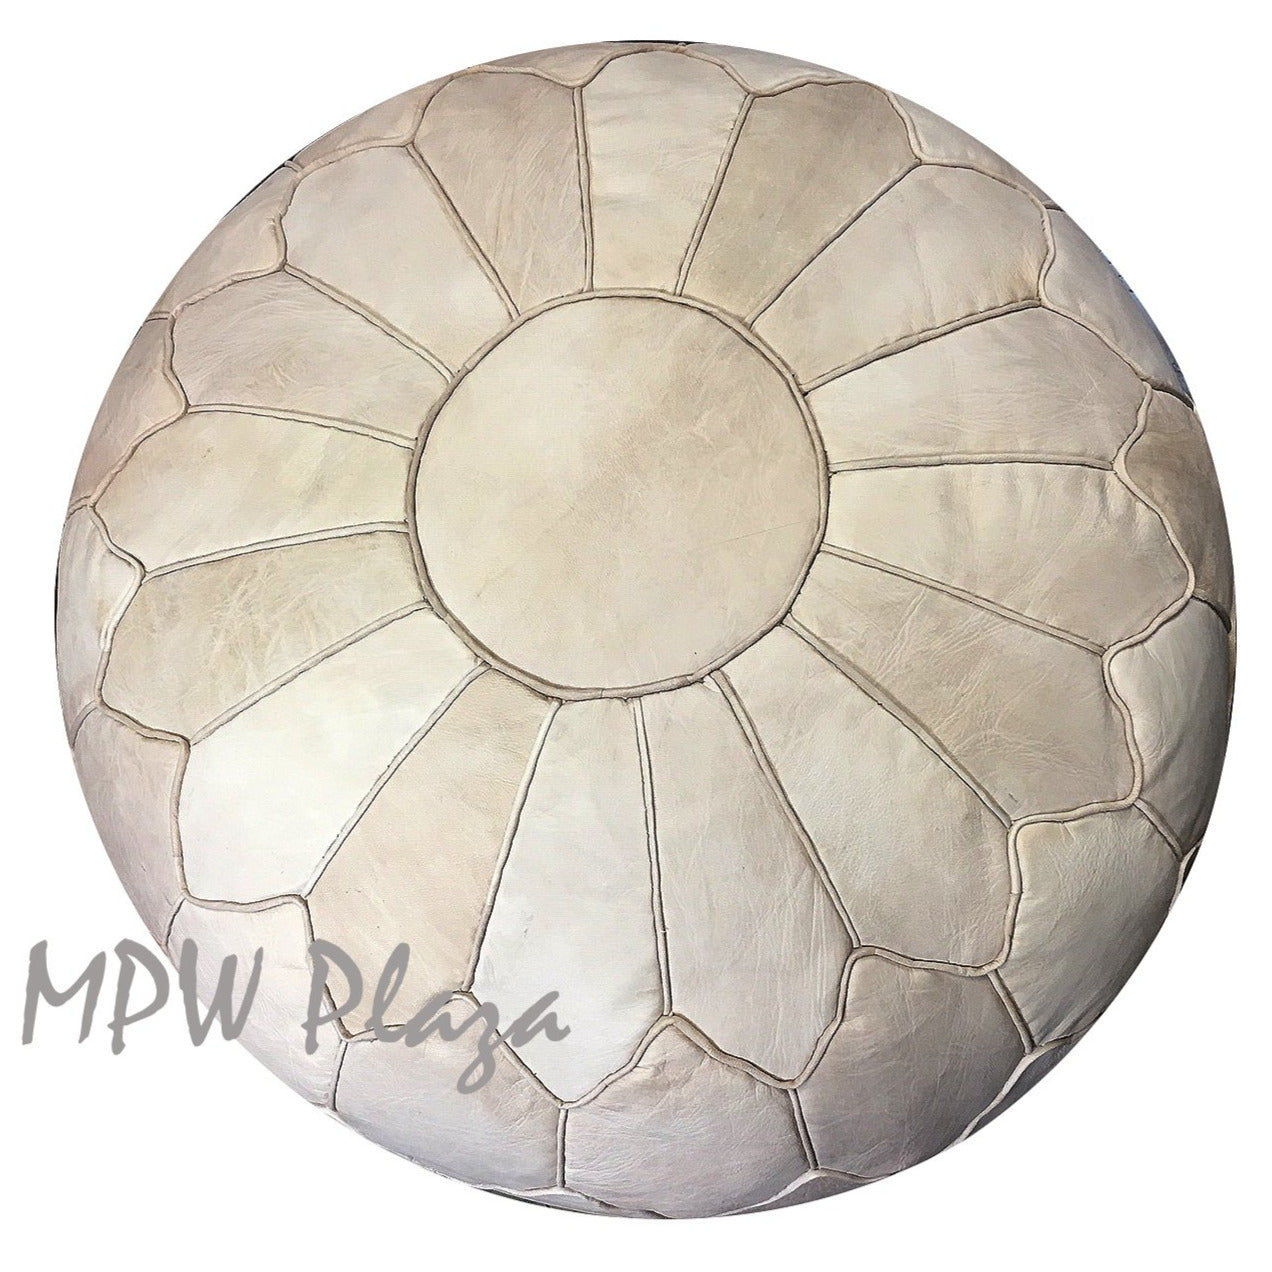 MPW Plaza® Retro Shell Moroccan Pouf, Natural tone, 19" x 29" Topshelf Moroccan Leather,  couture ottoman (Cover) freeshipping - MPW Plaza®